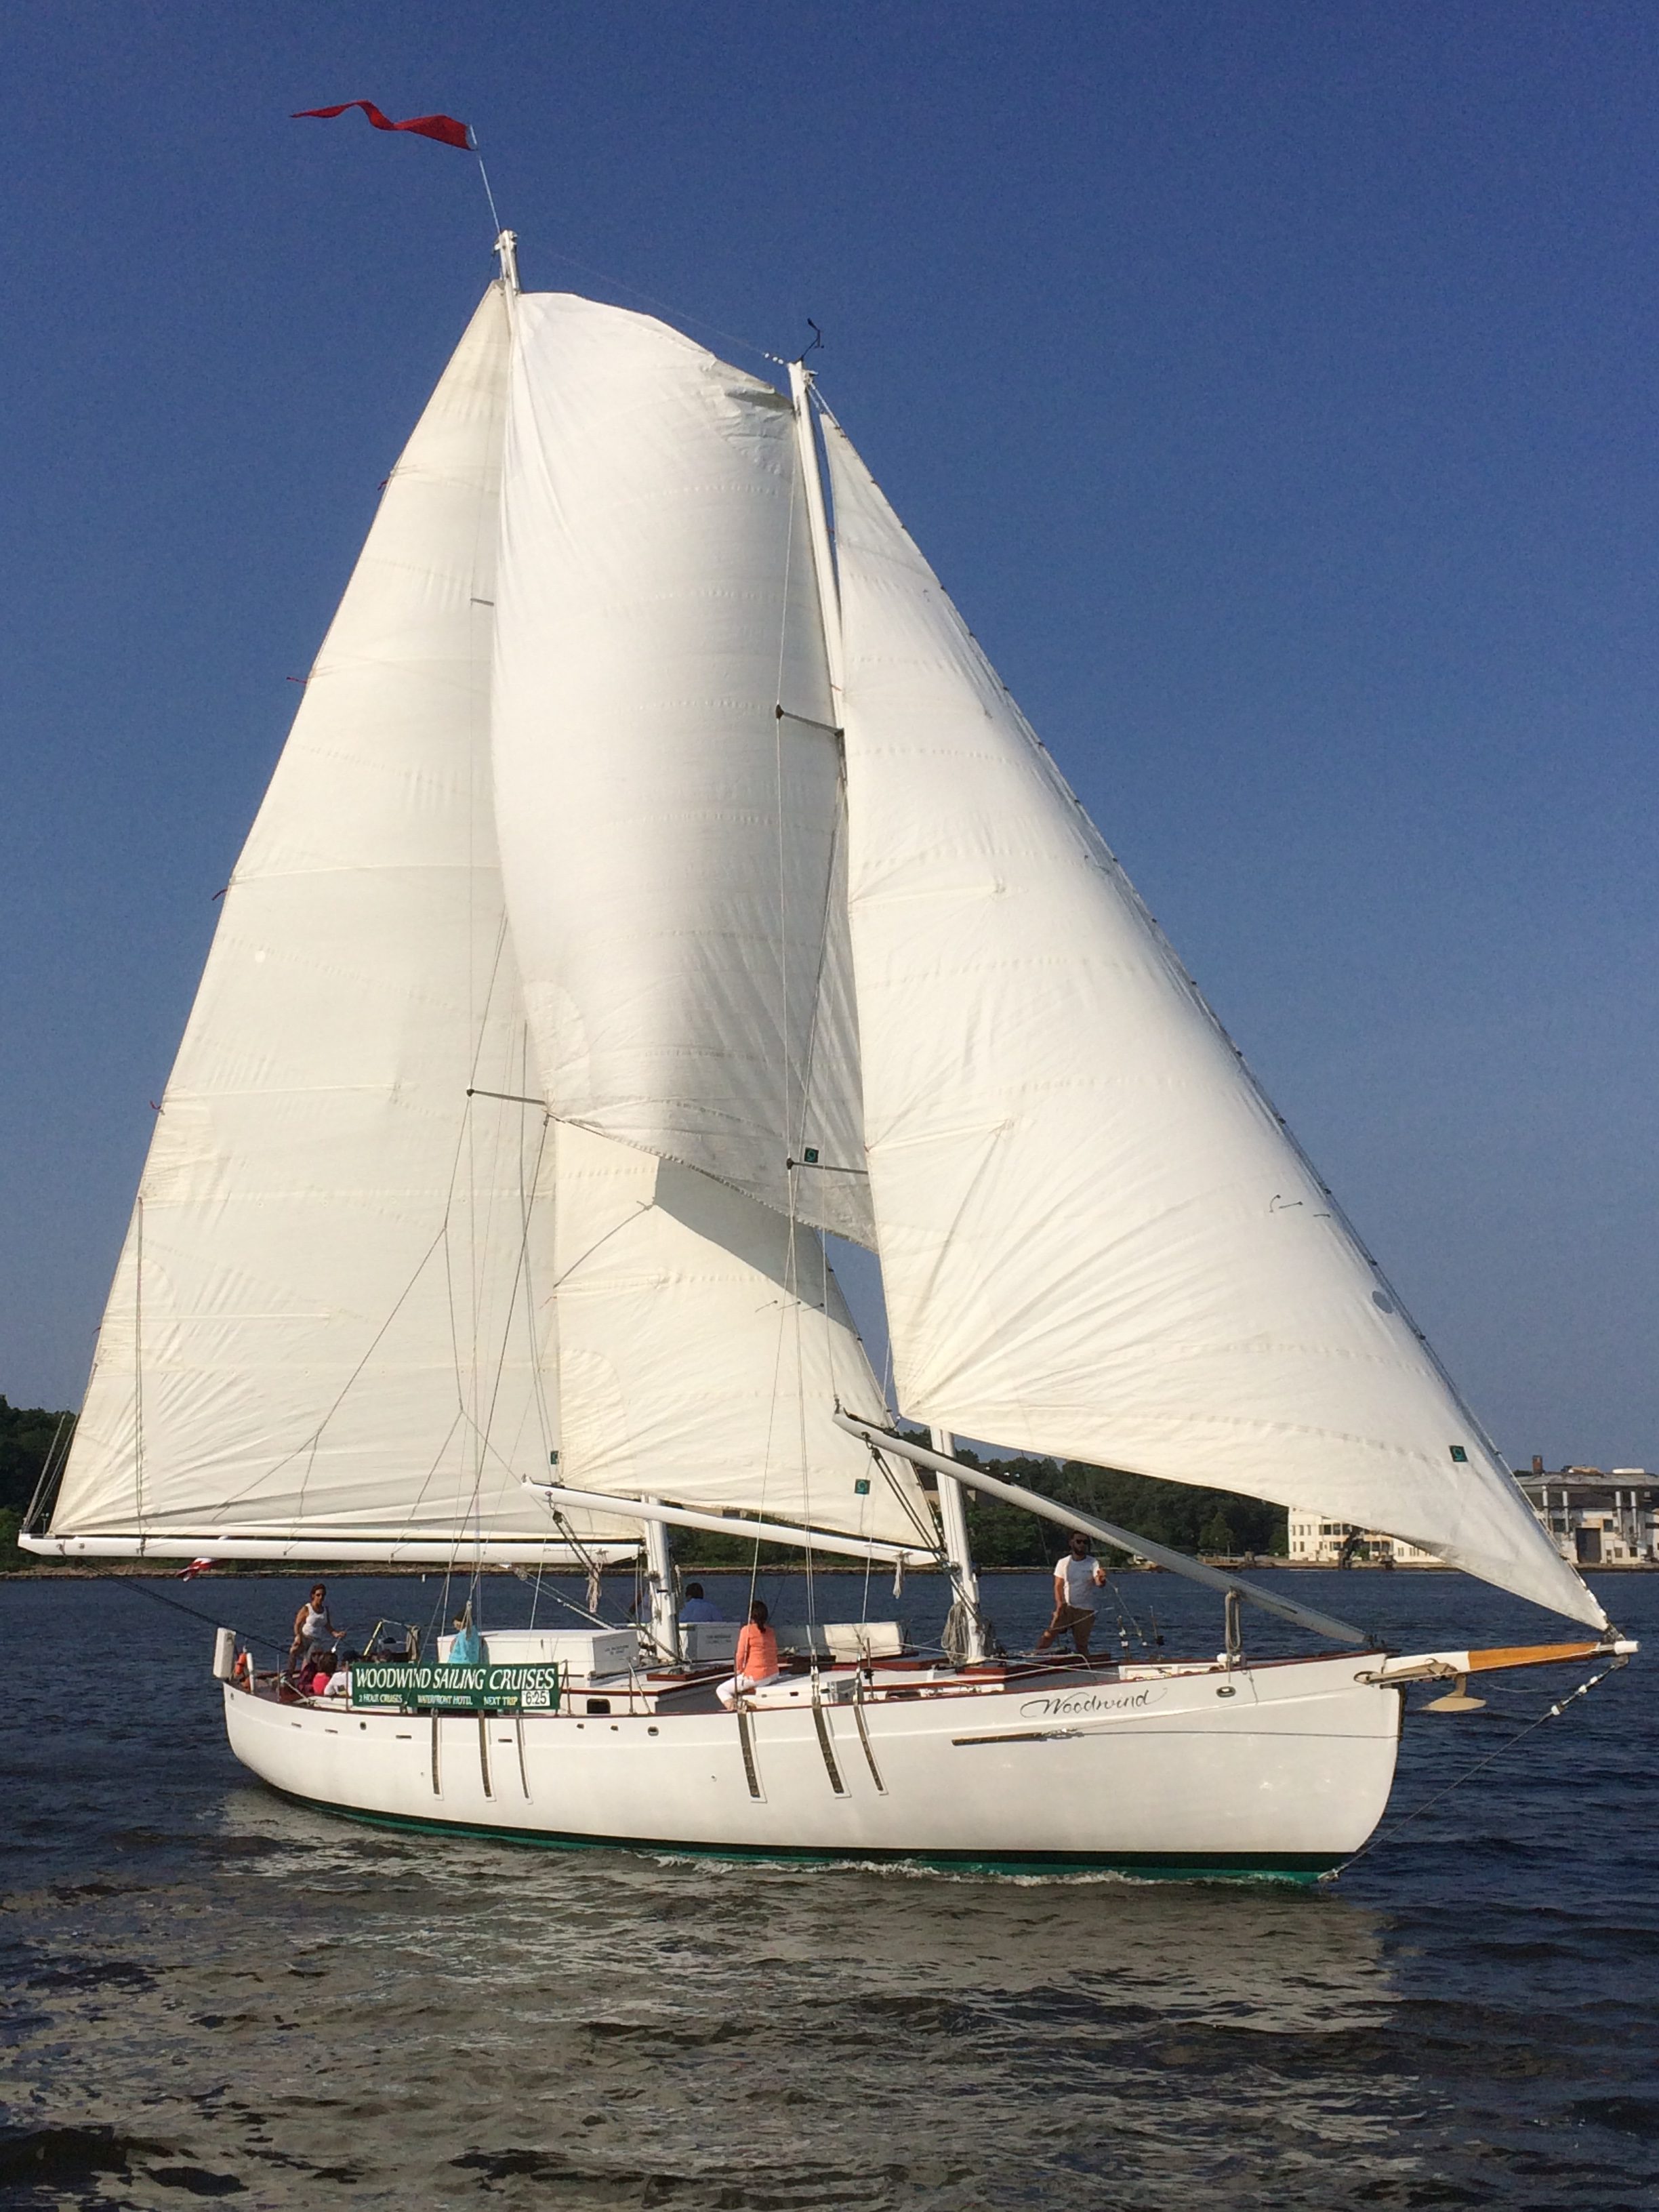 Schooner full sails on a brilliant blue sky day